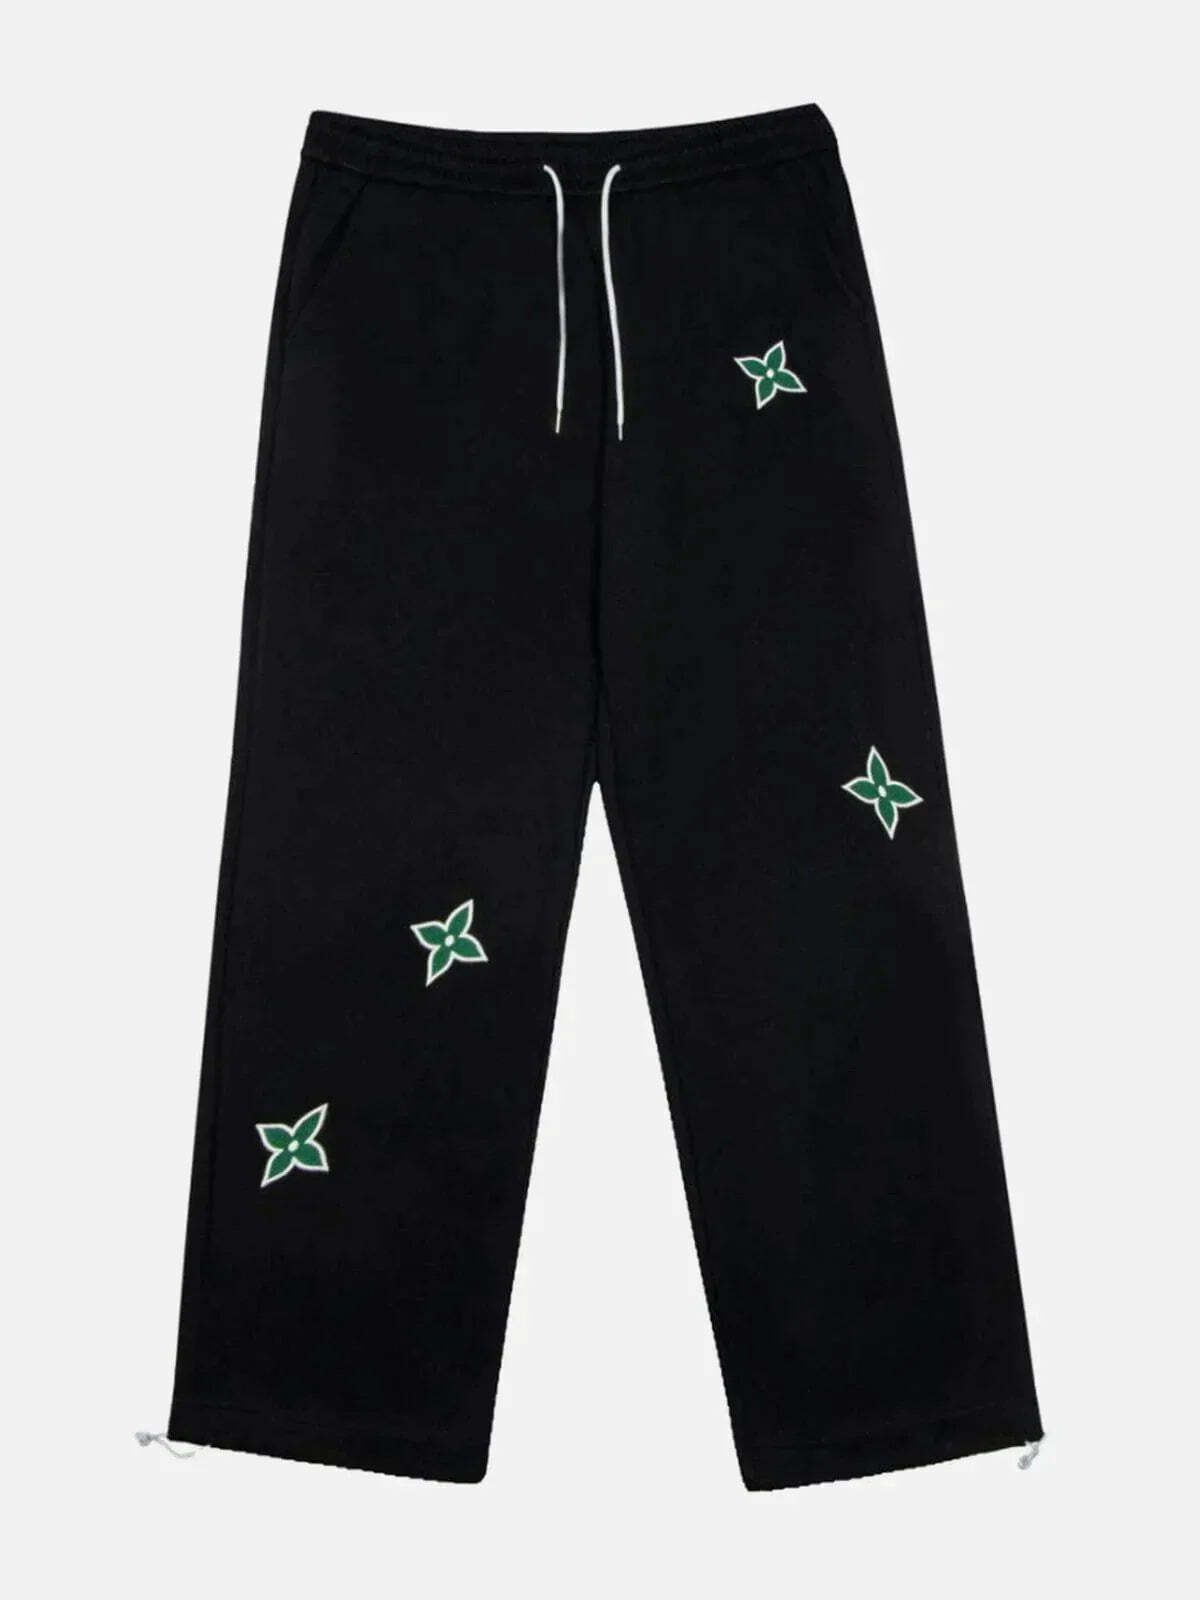 embroidered drawstring pants edgy & stylish streetwear 3319